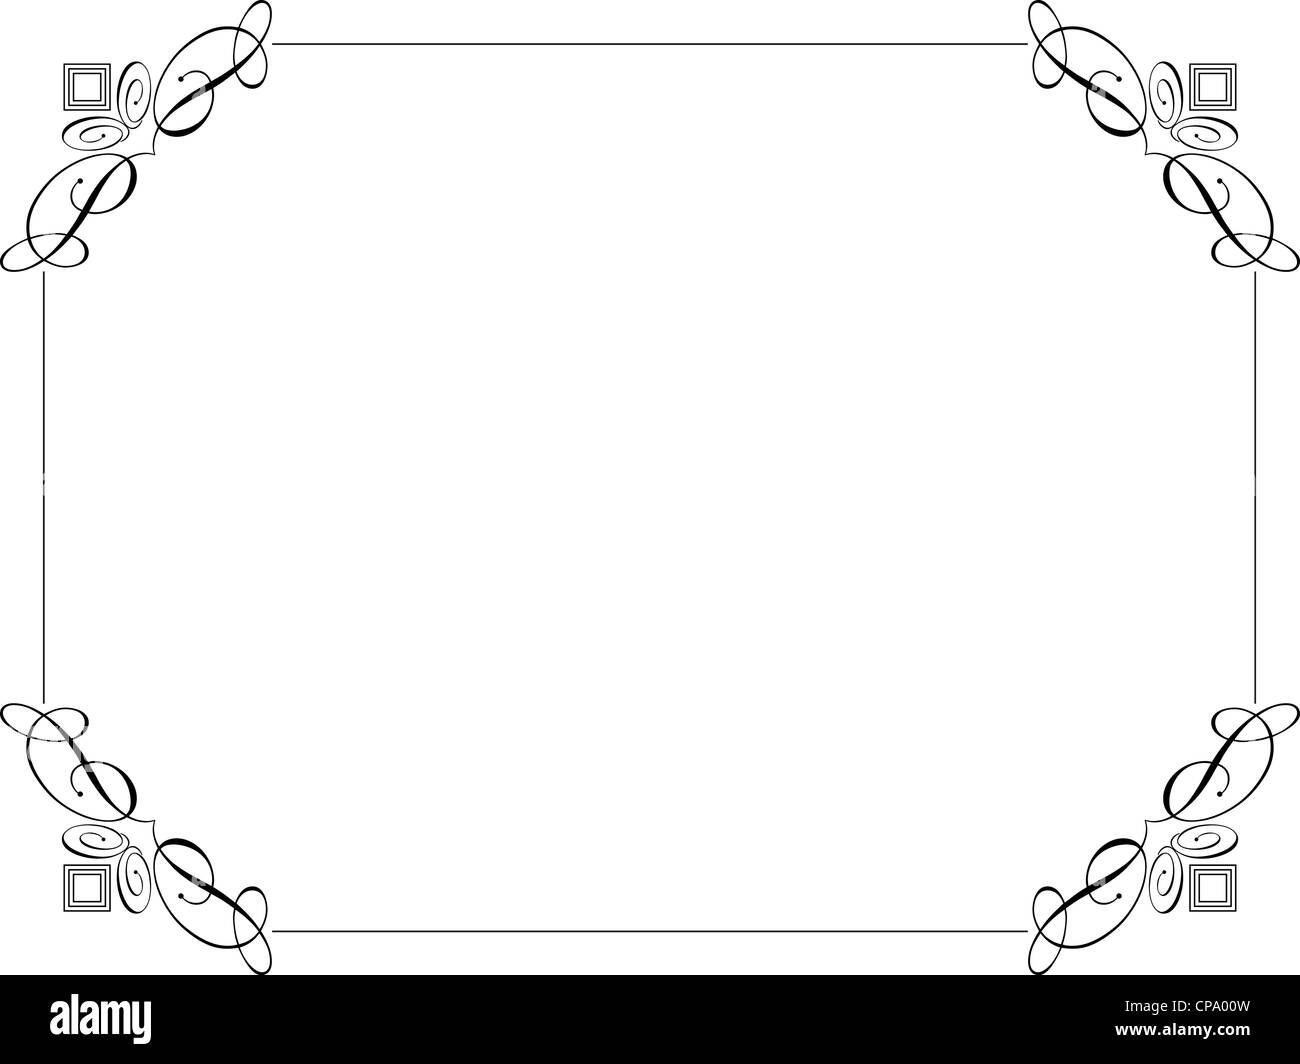 Decorative border on a white background Stock Photo - Alamy